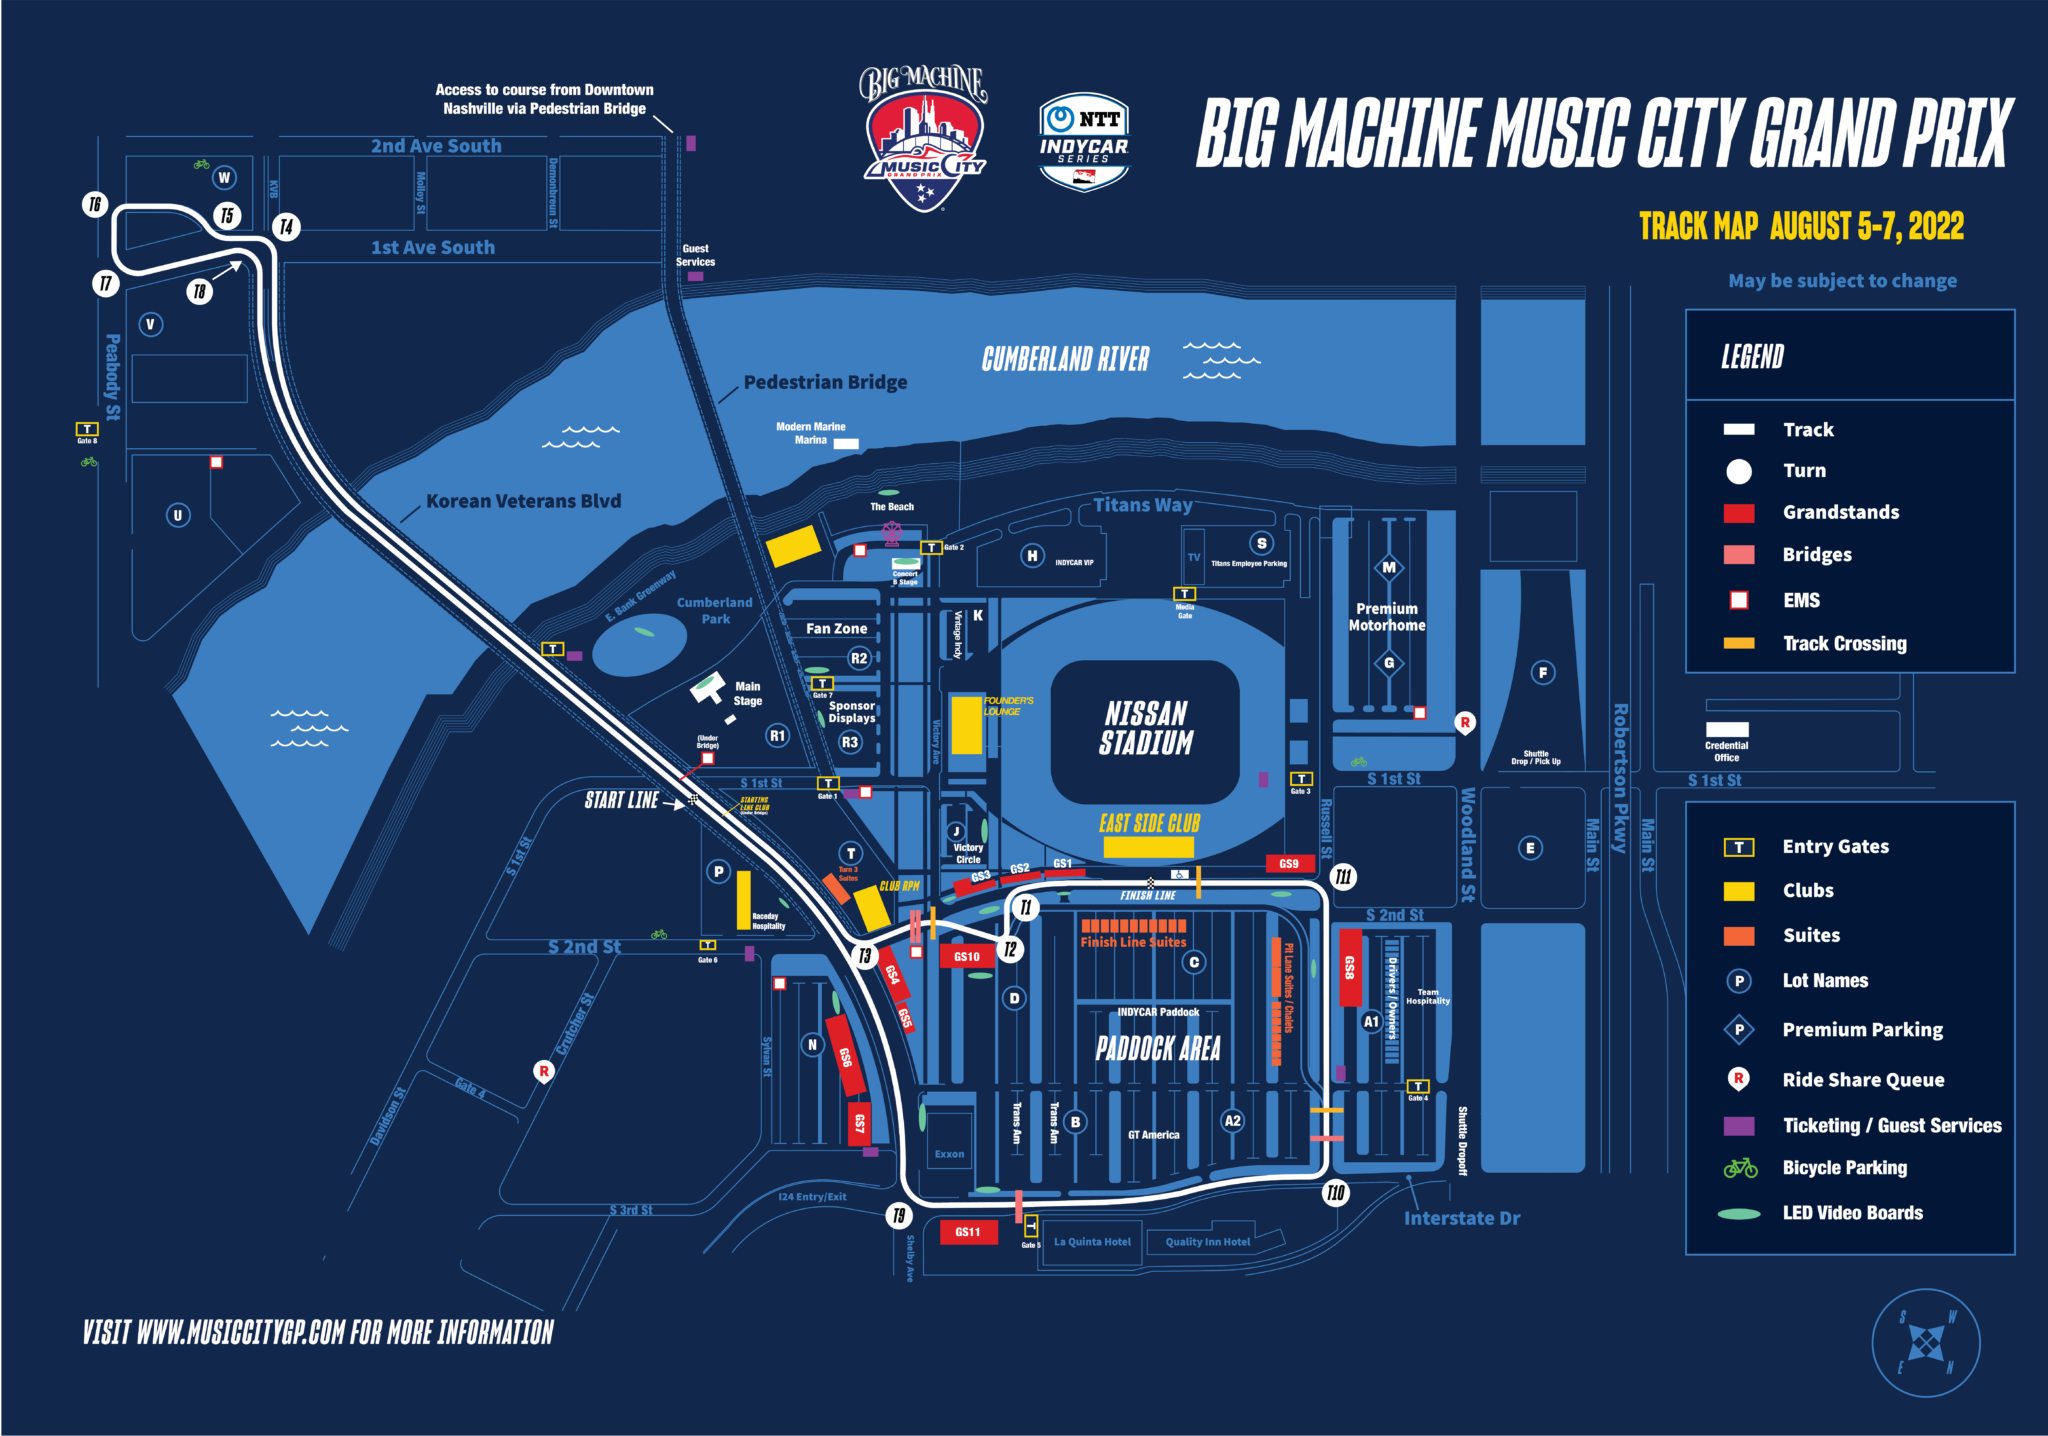 Big Machine Music City Grand Prix